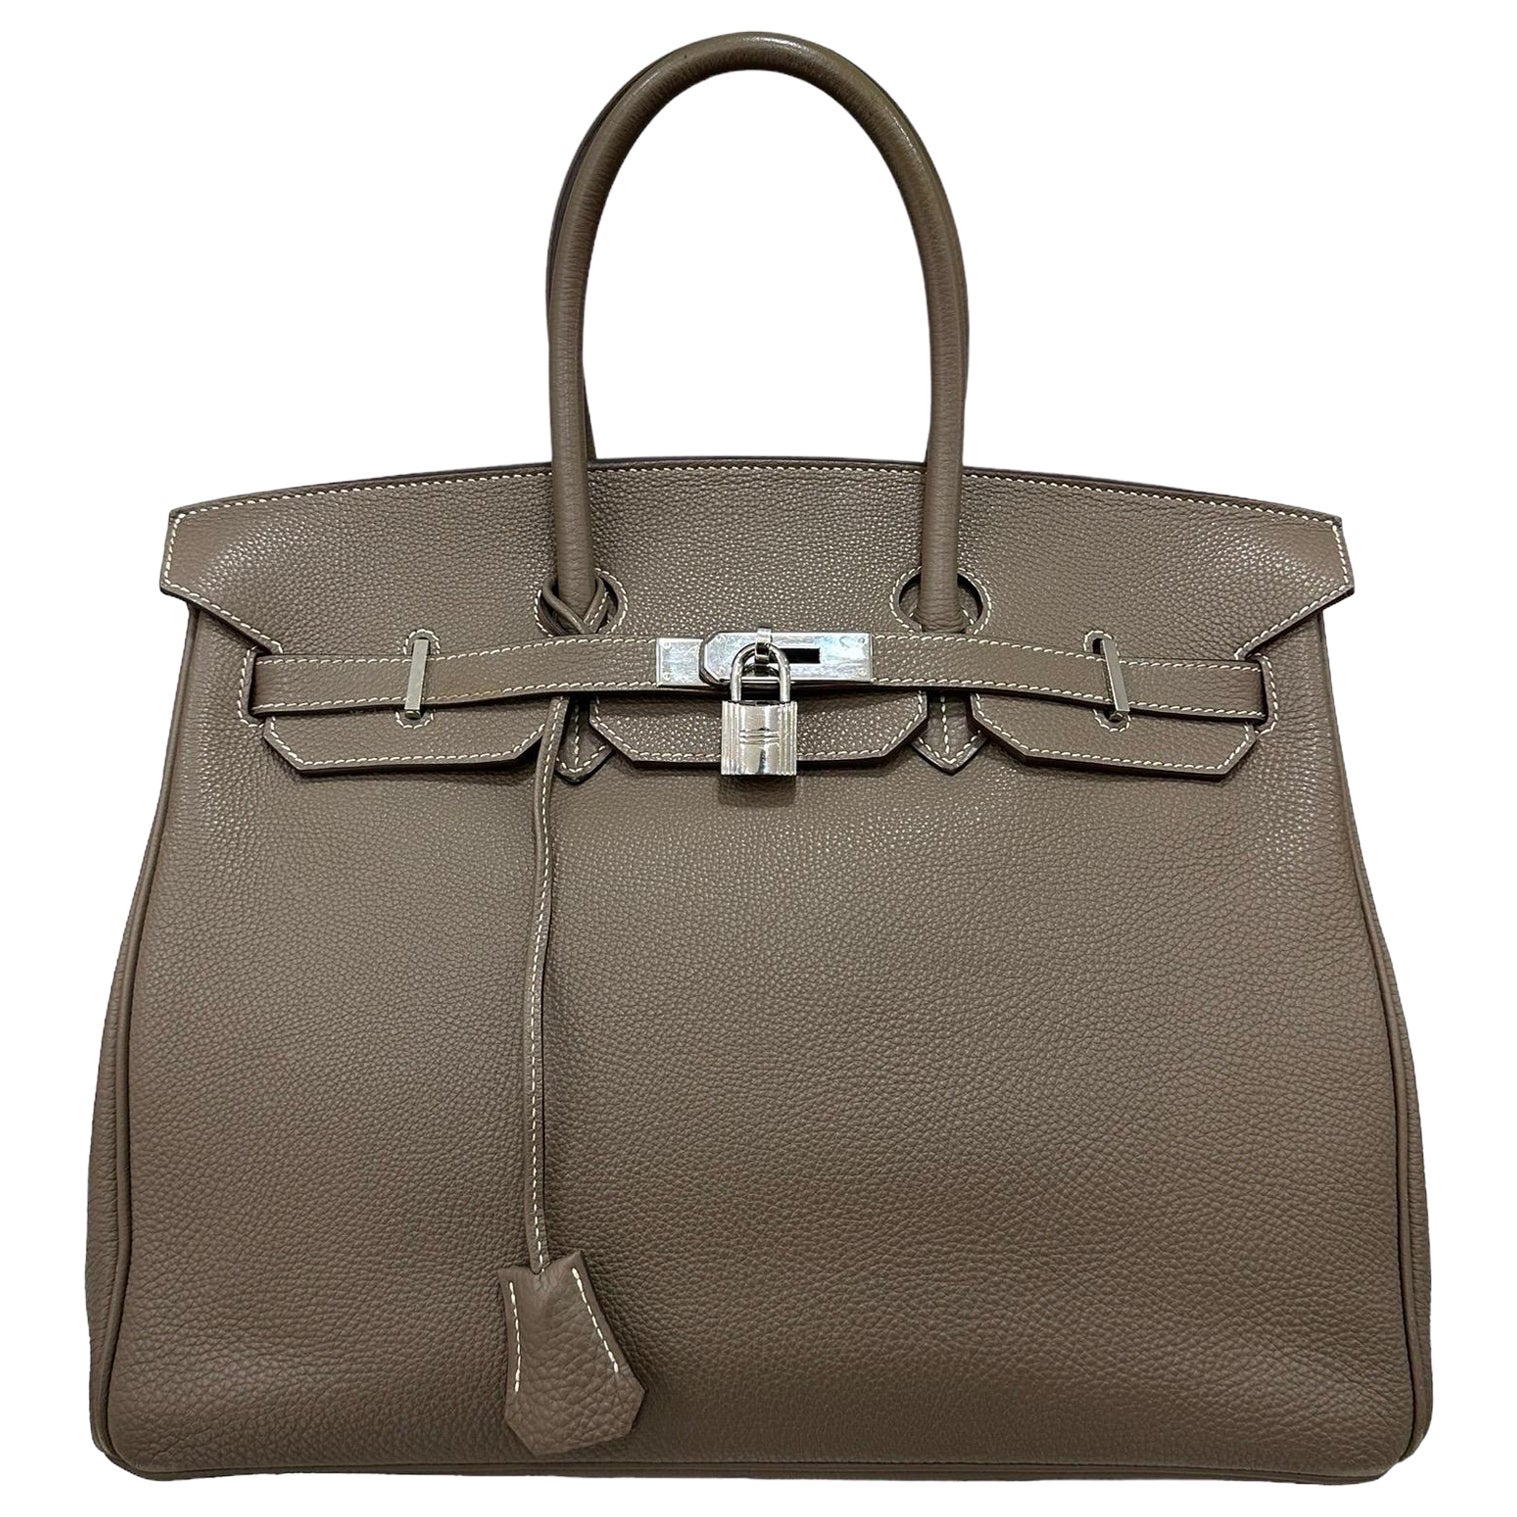 2008 Hermès Birkin 35 Togo Leather Toundra Top Handle Bag For Sale